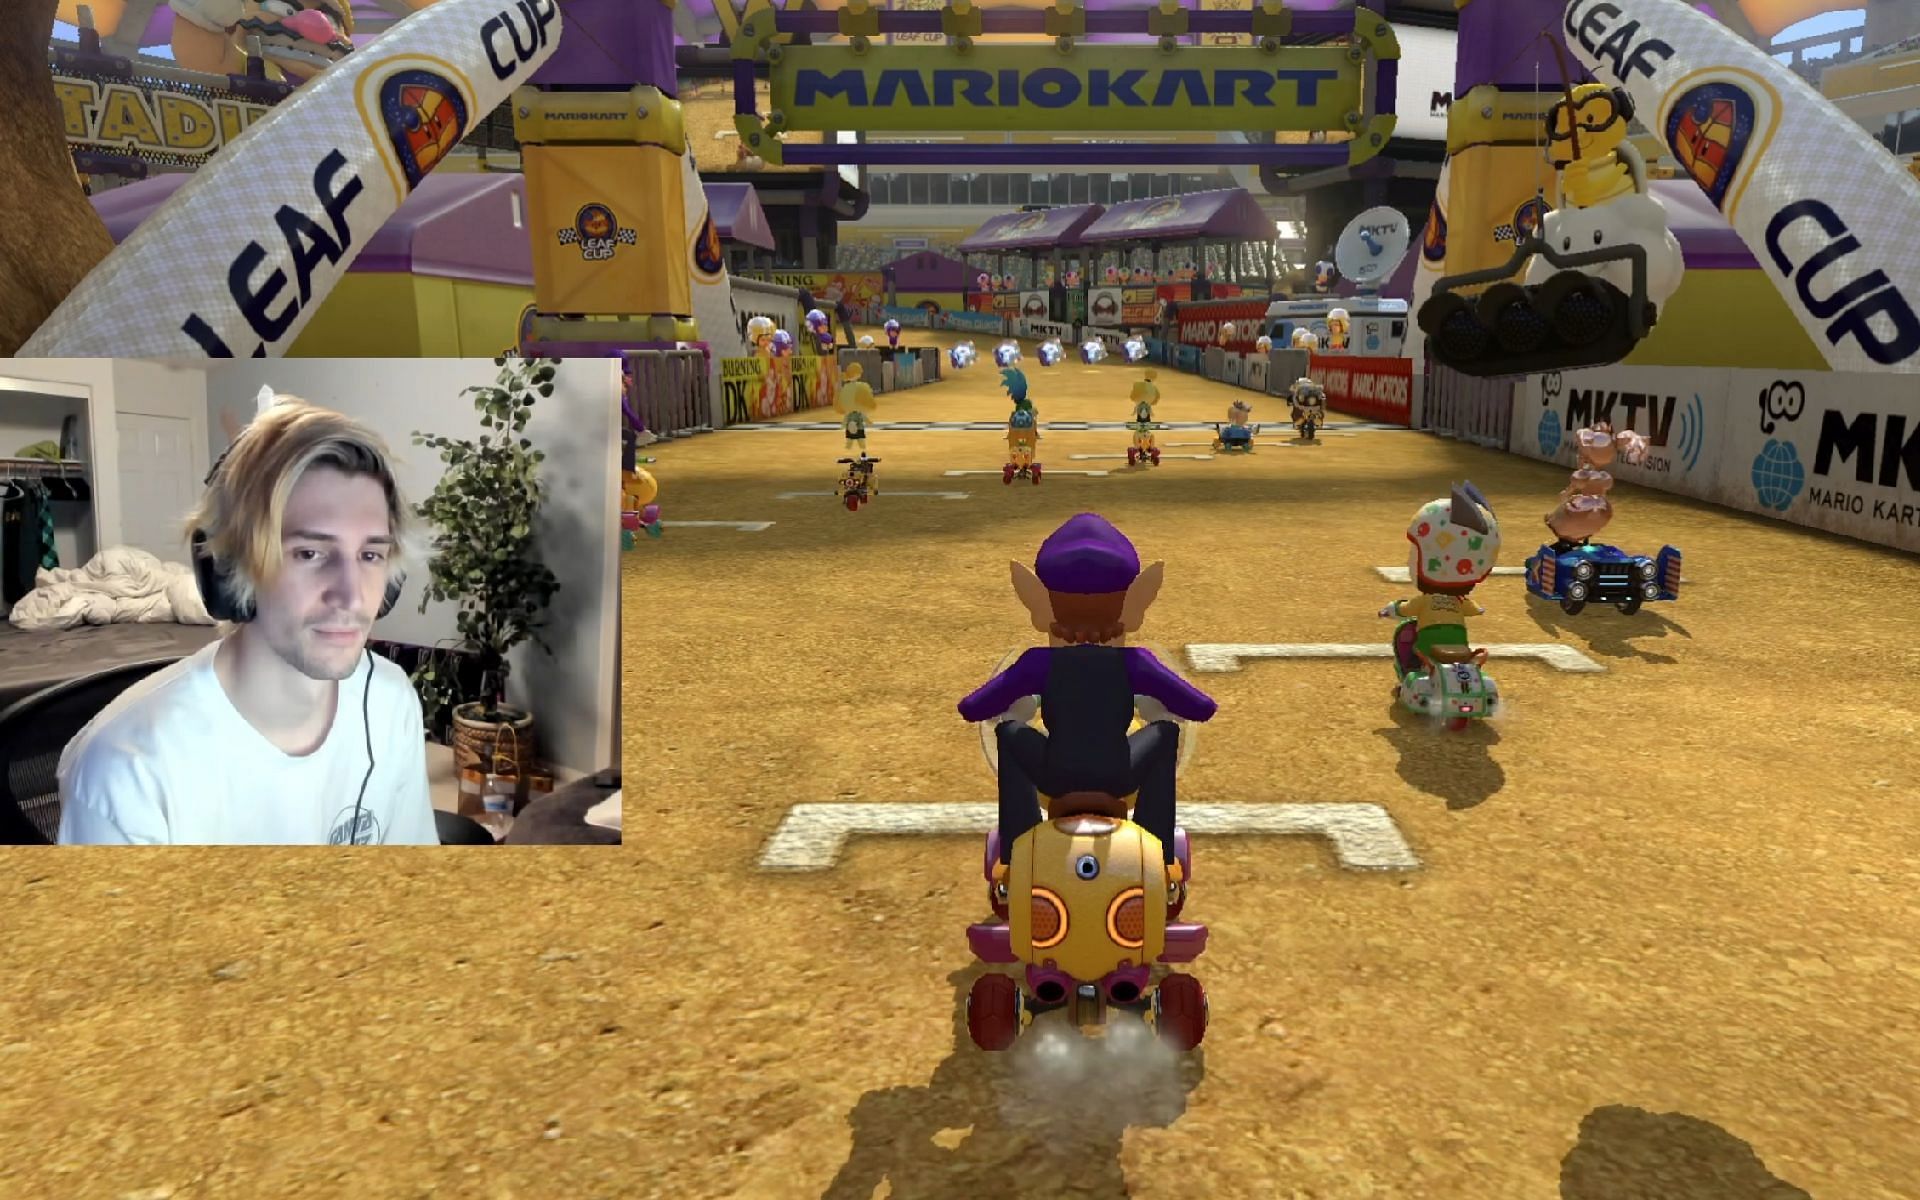 Mario Kart Tournament takes over LowBrau